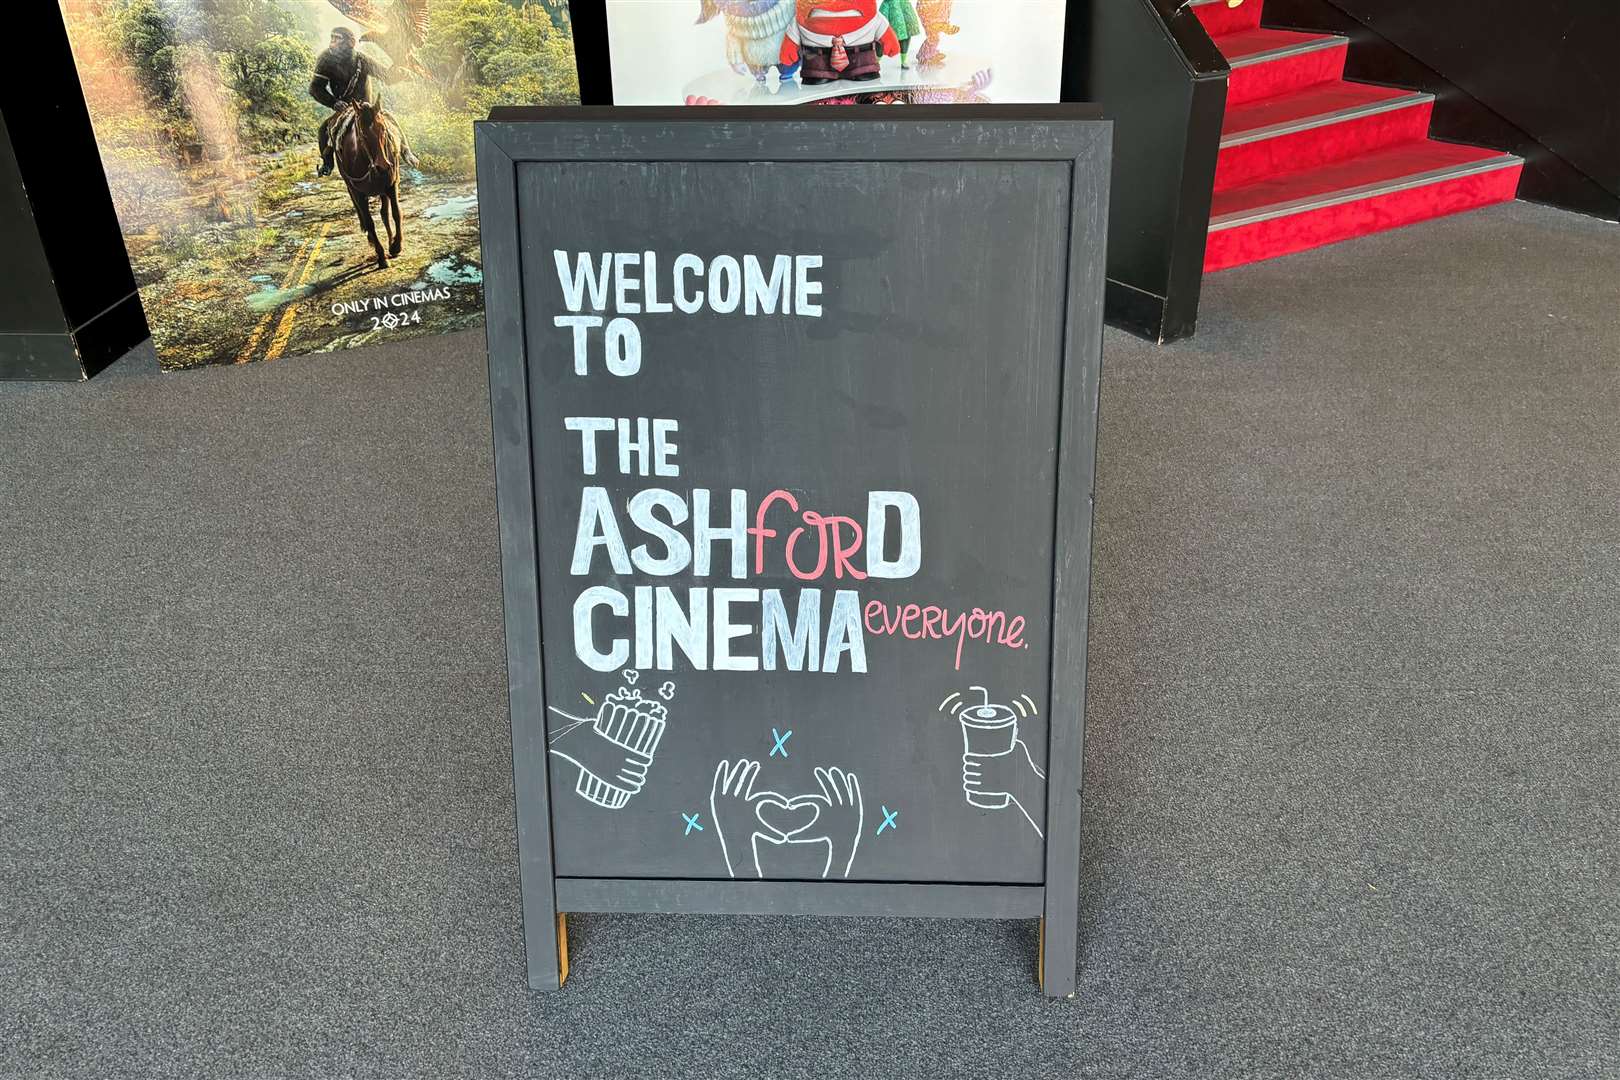 The Ashford Cinema features six screens